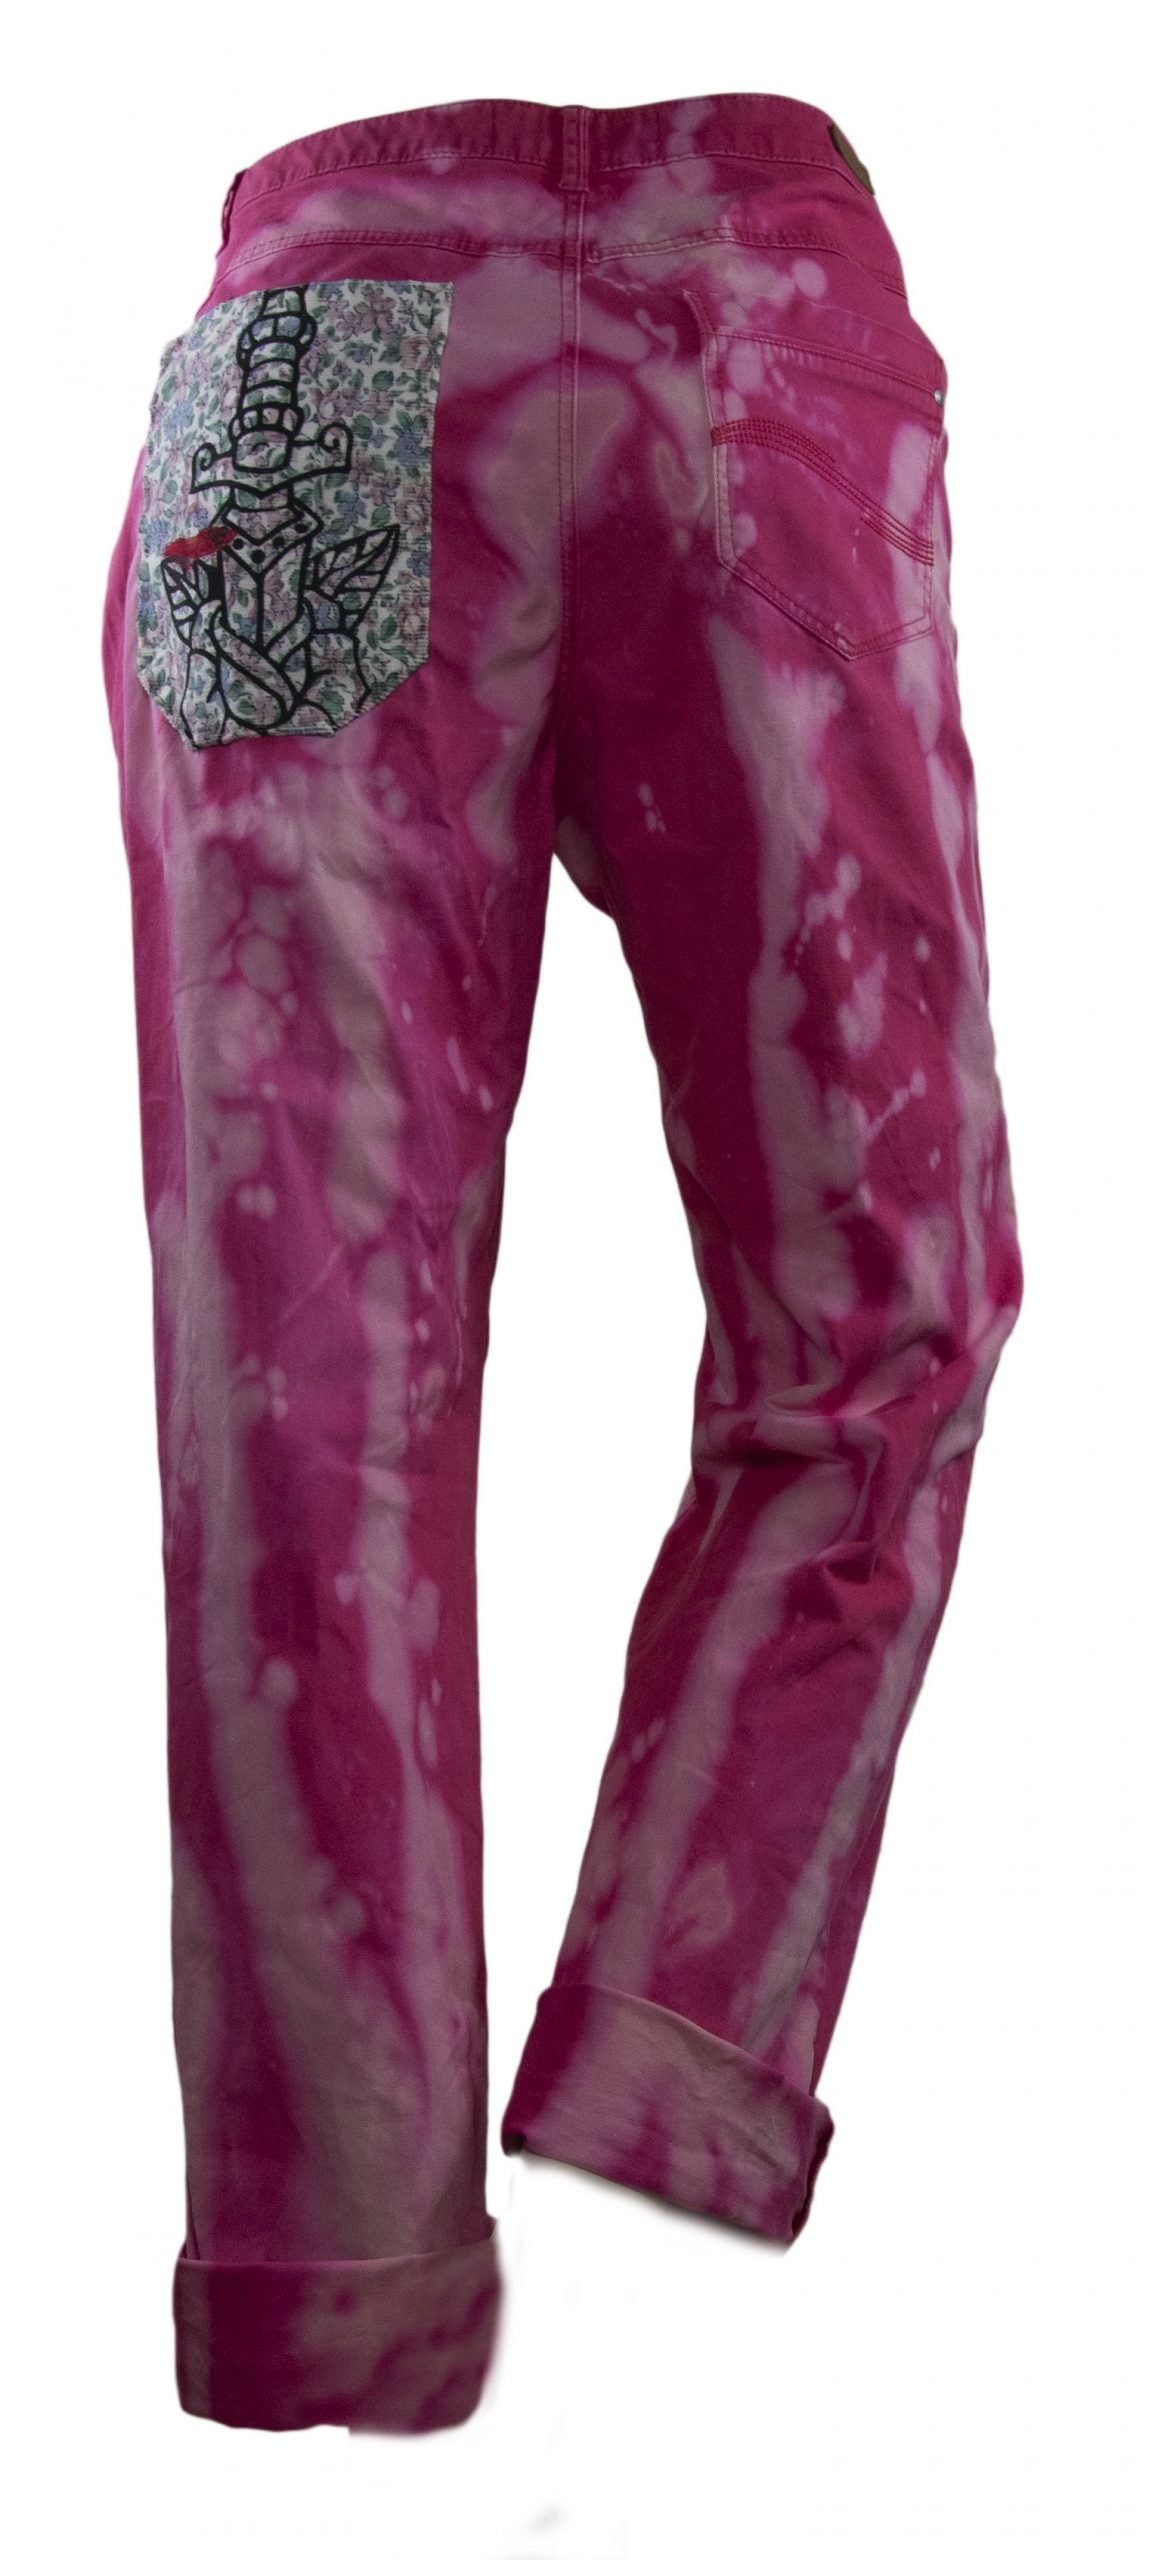 Splatter Print Jeans Pink XL